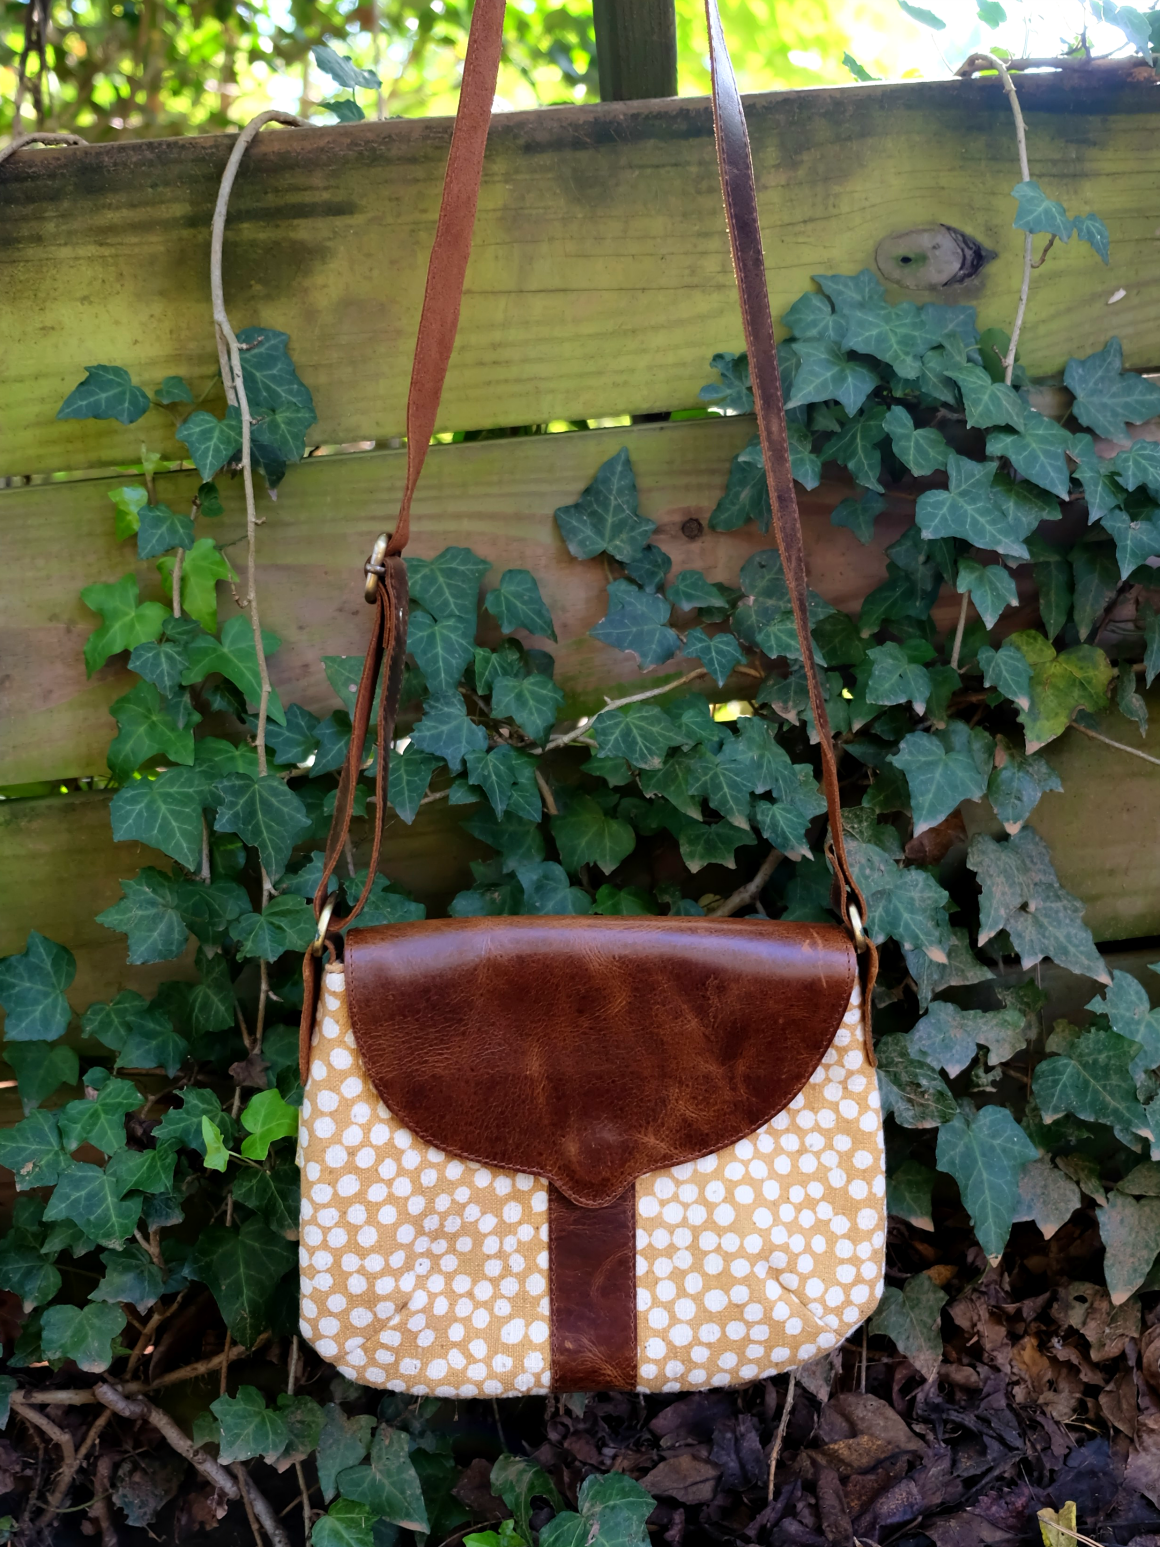 JOYN bags fair trade handbags review and giveaway